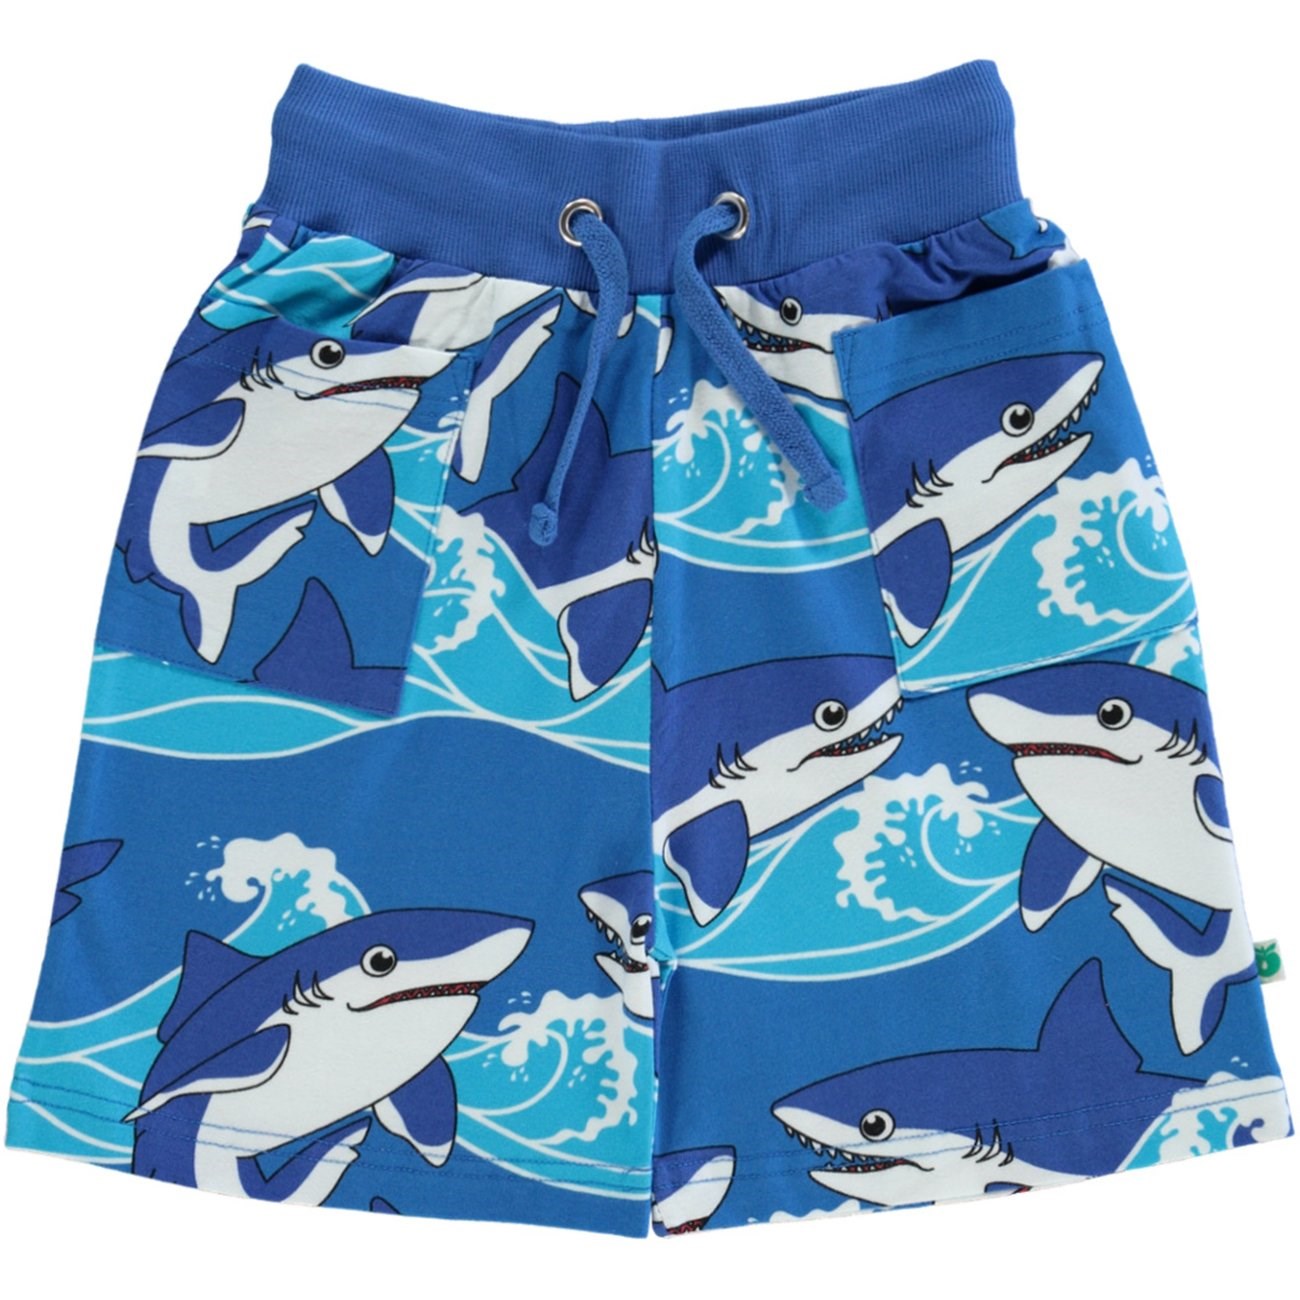 Småfolk Brilliant Blue Shorts With Sharks